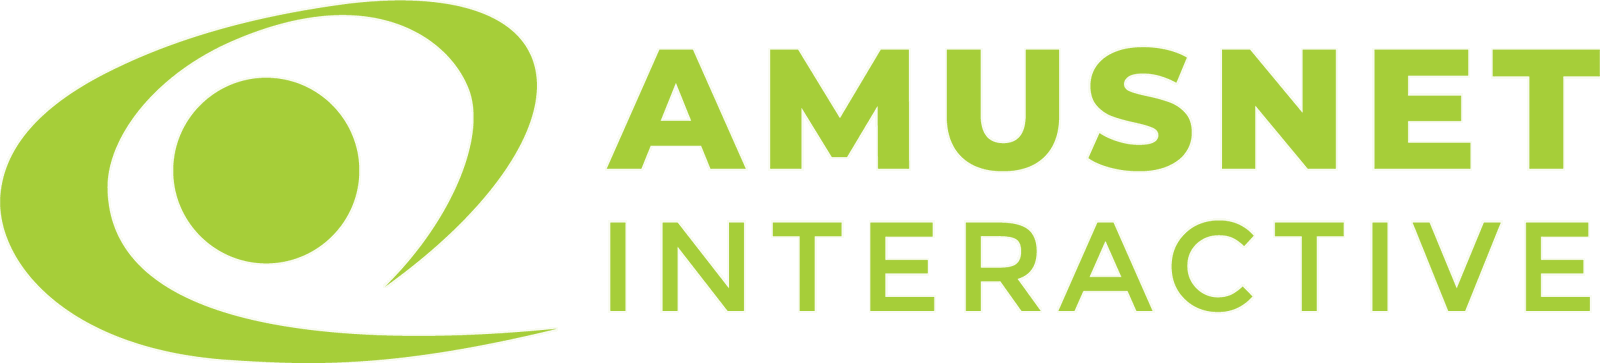 Amusnet_Interactive_Green